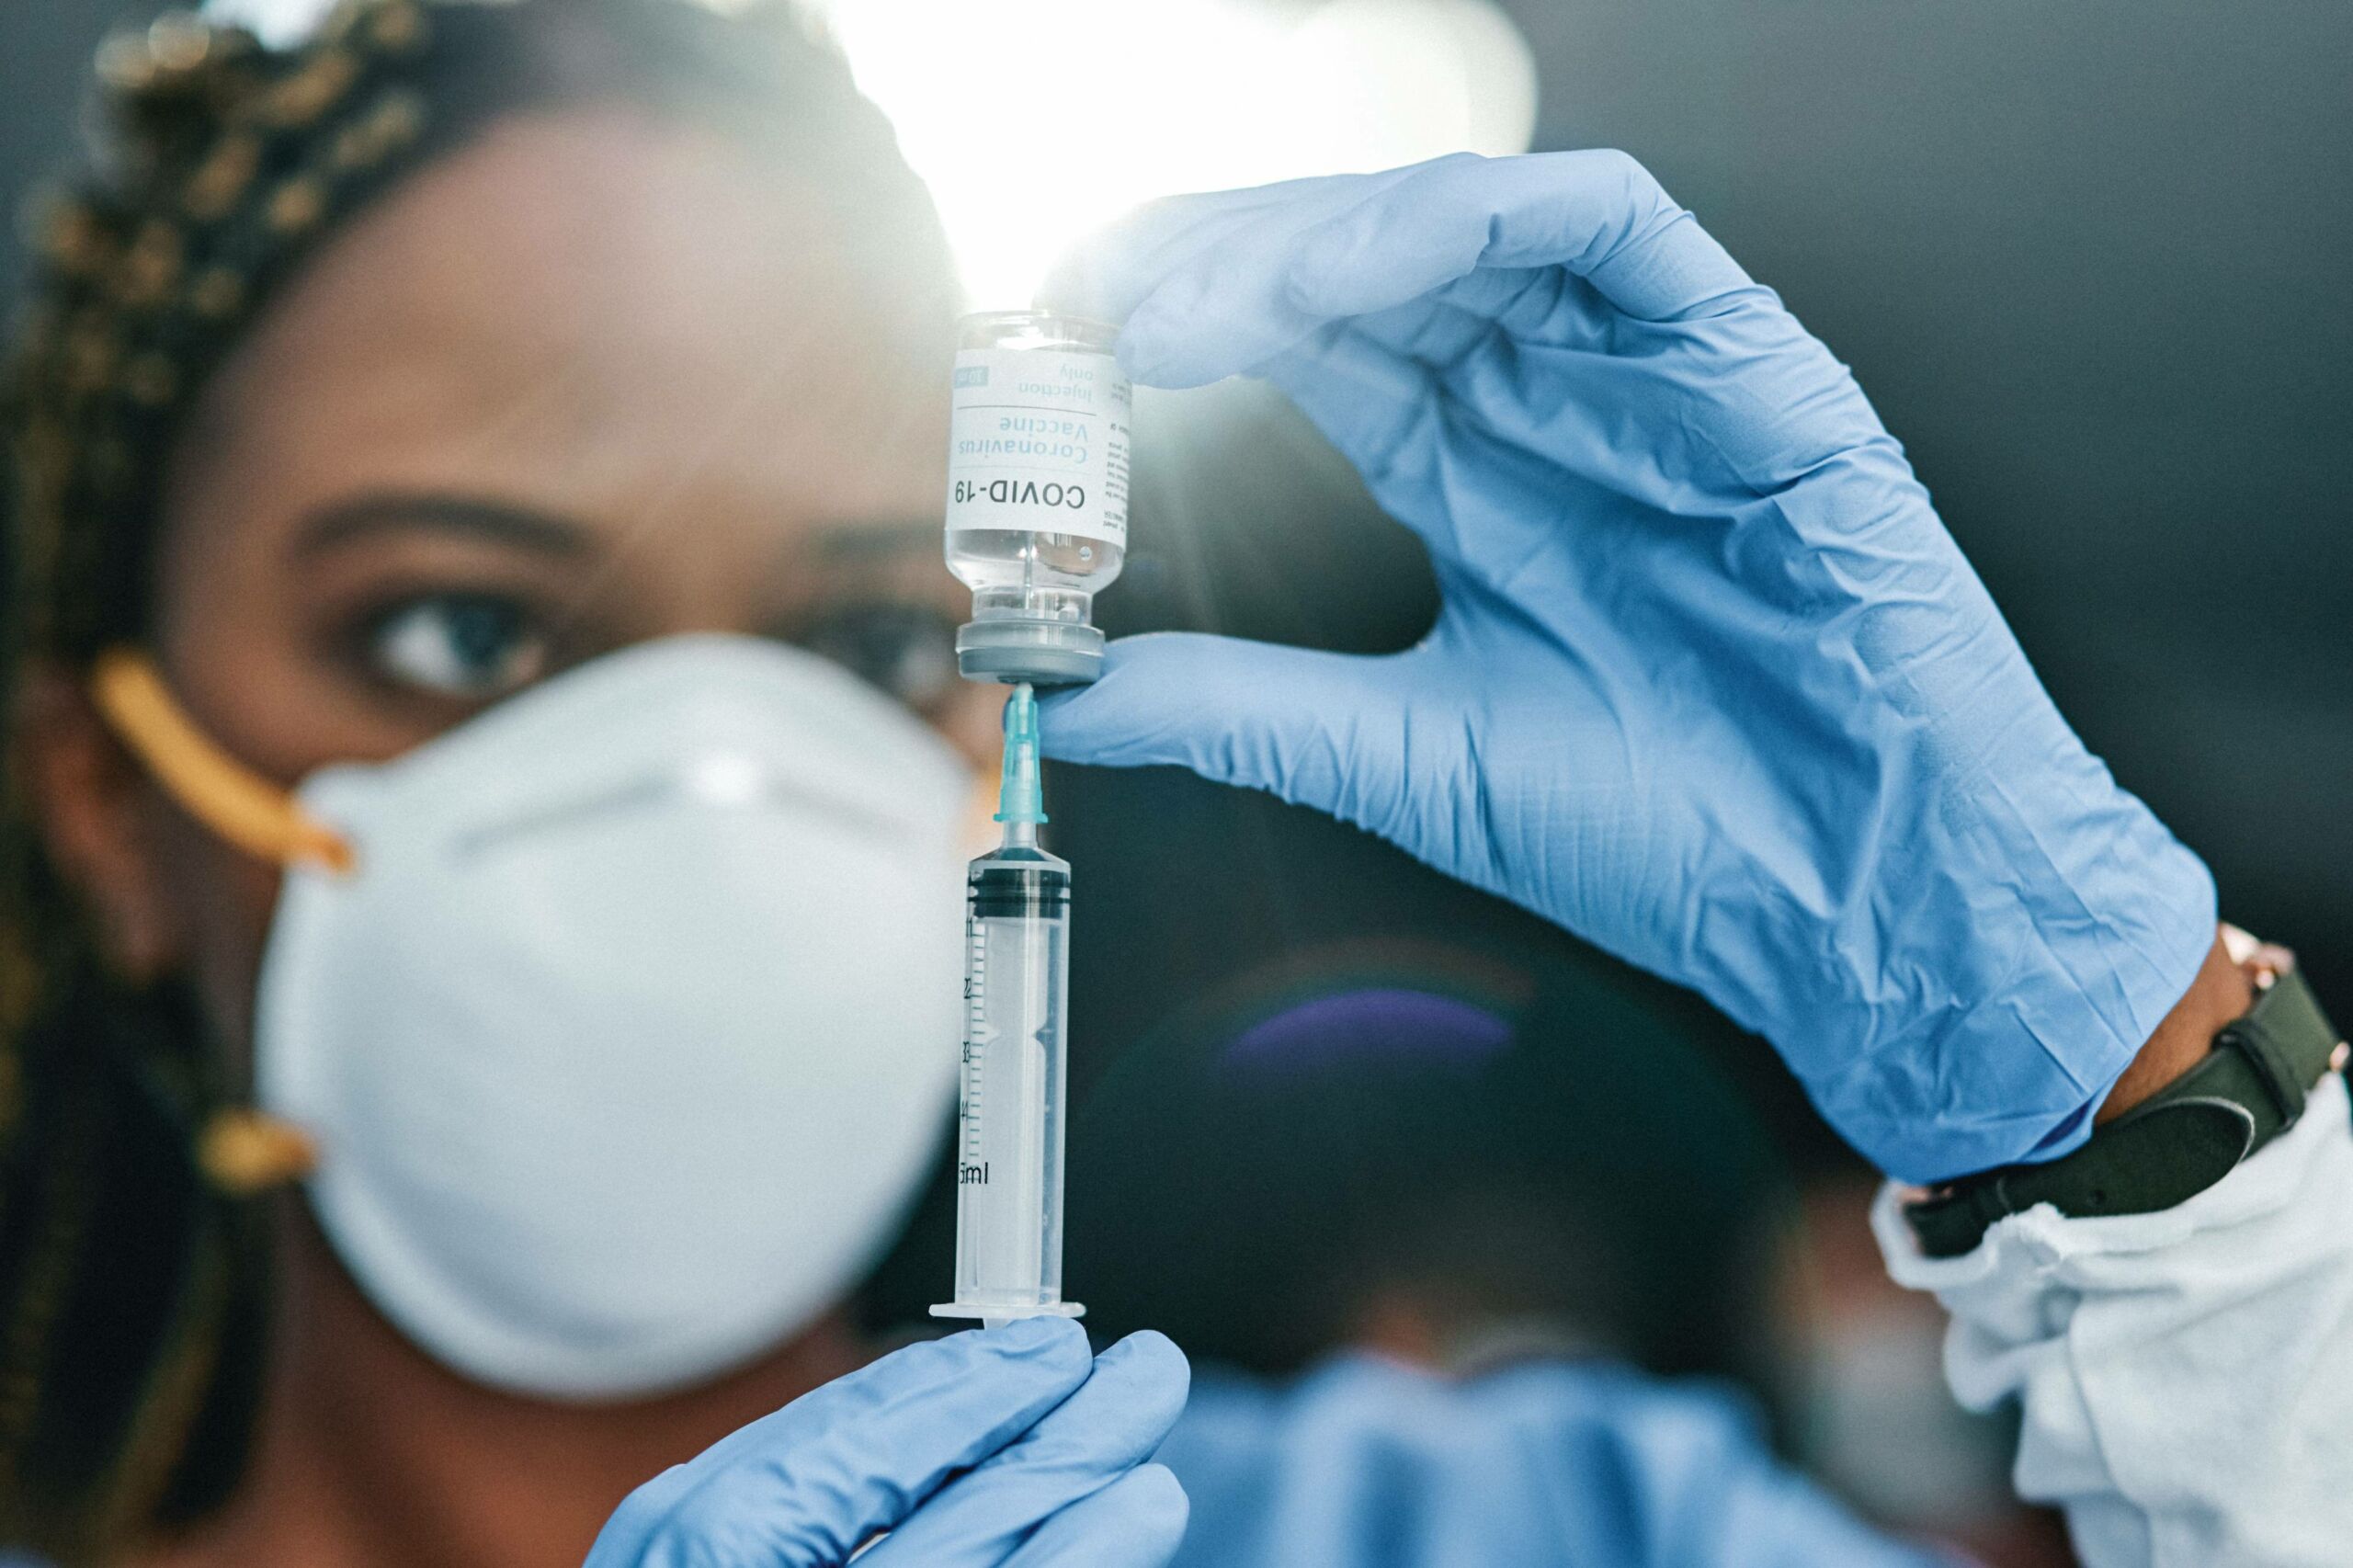 health worker preparing a vaccine